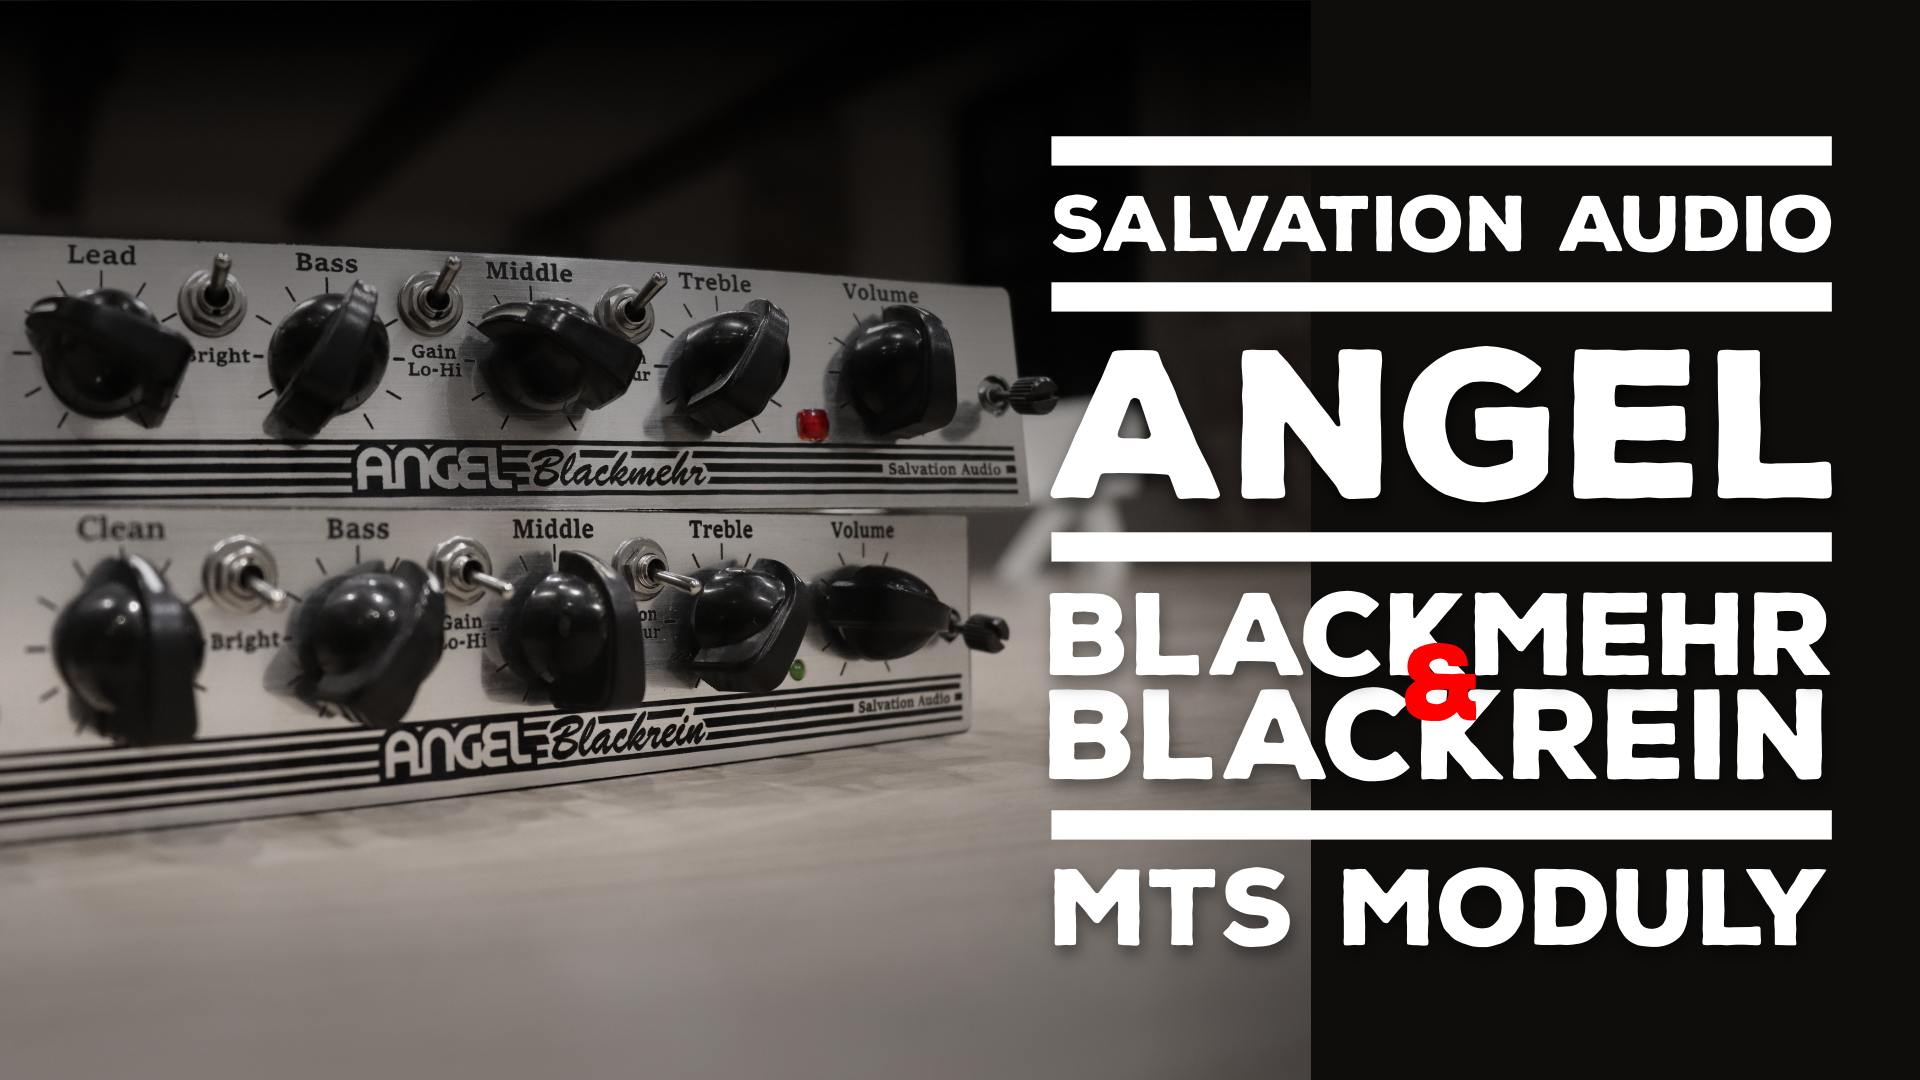 Salvation Audio ANGEL Blackmehr/Blackrein MTS moduly (ENGL Blackmore) - Hračky na hraní #29